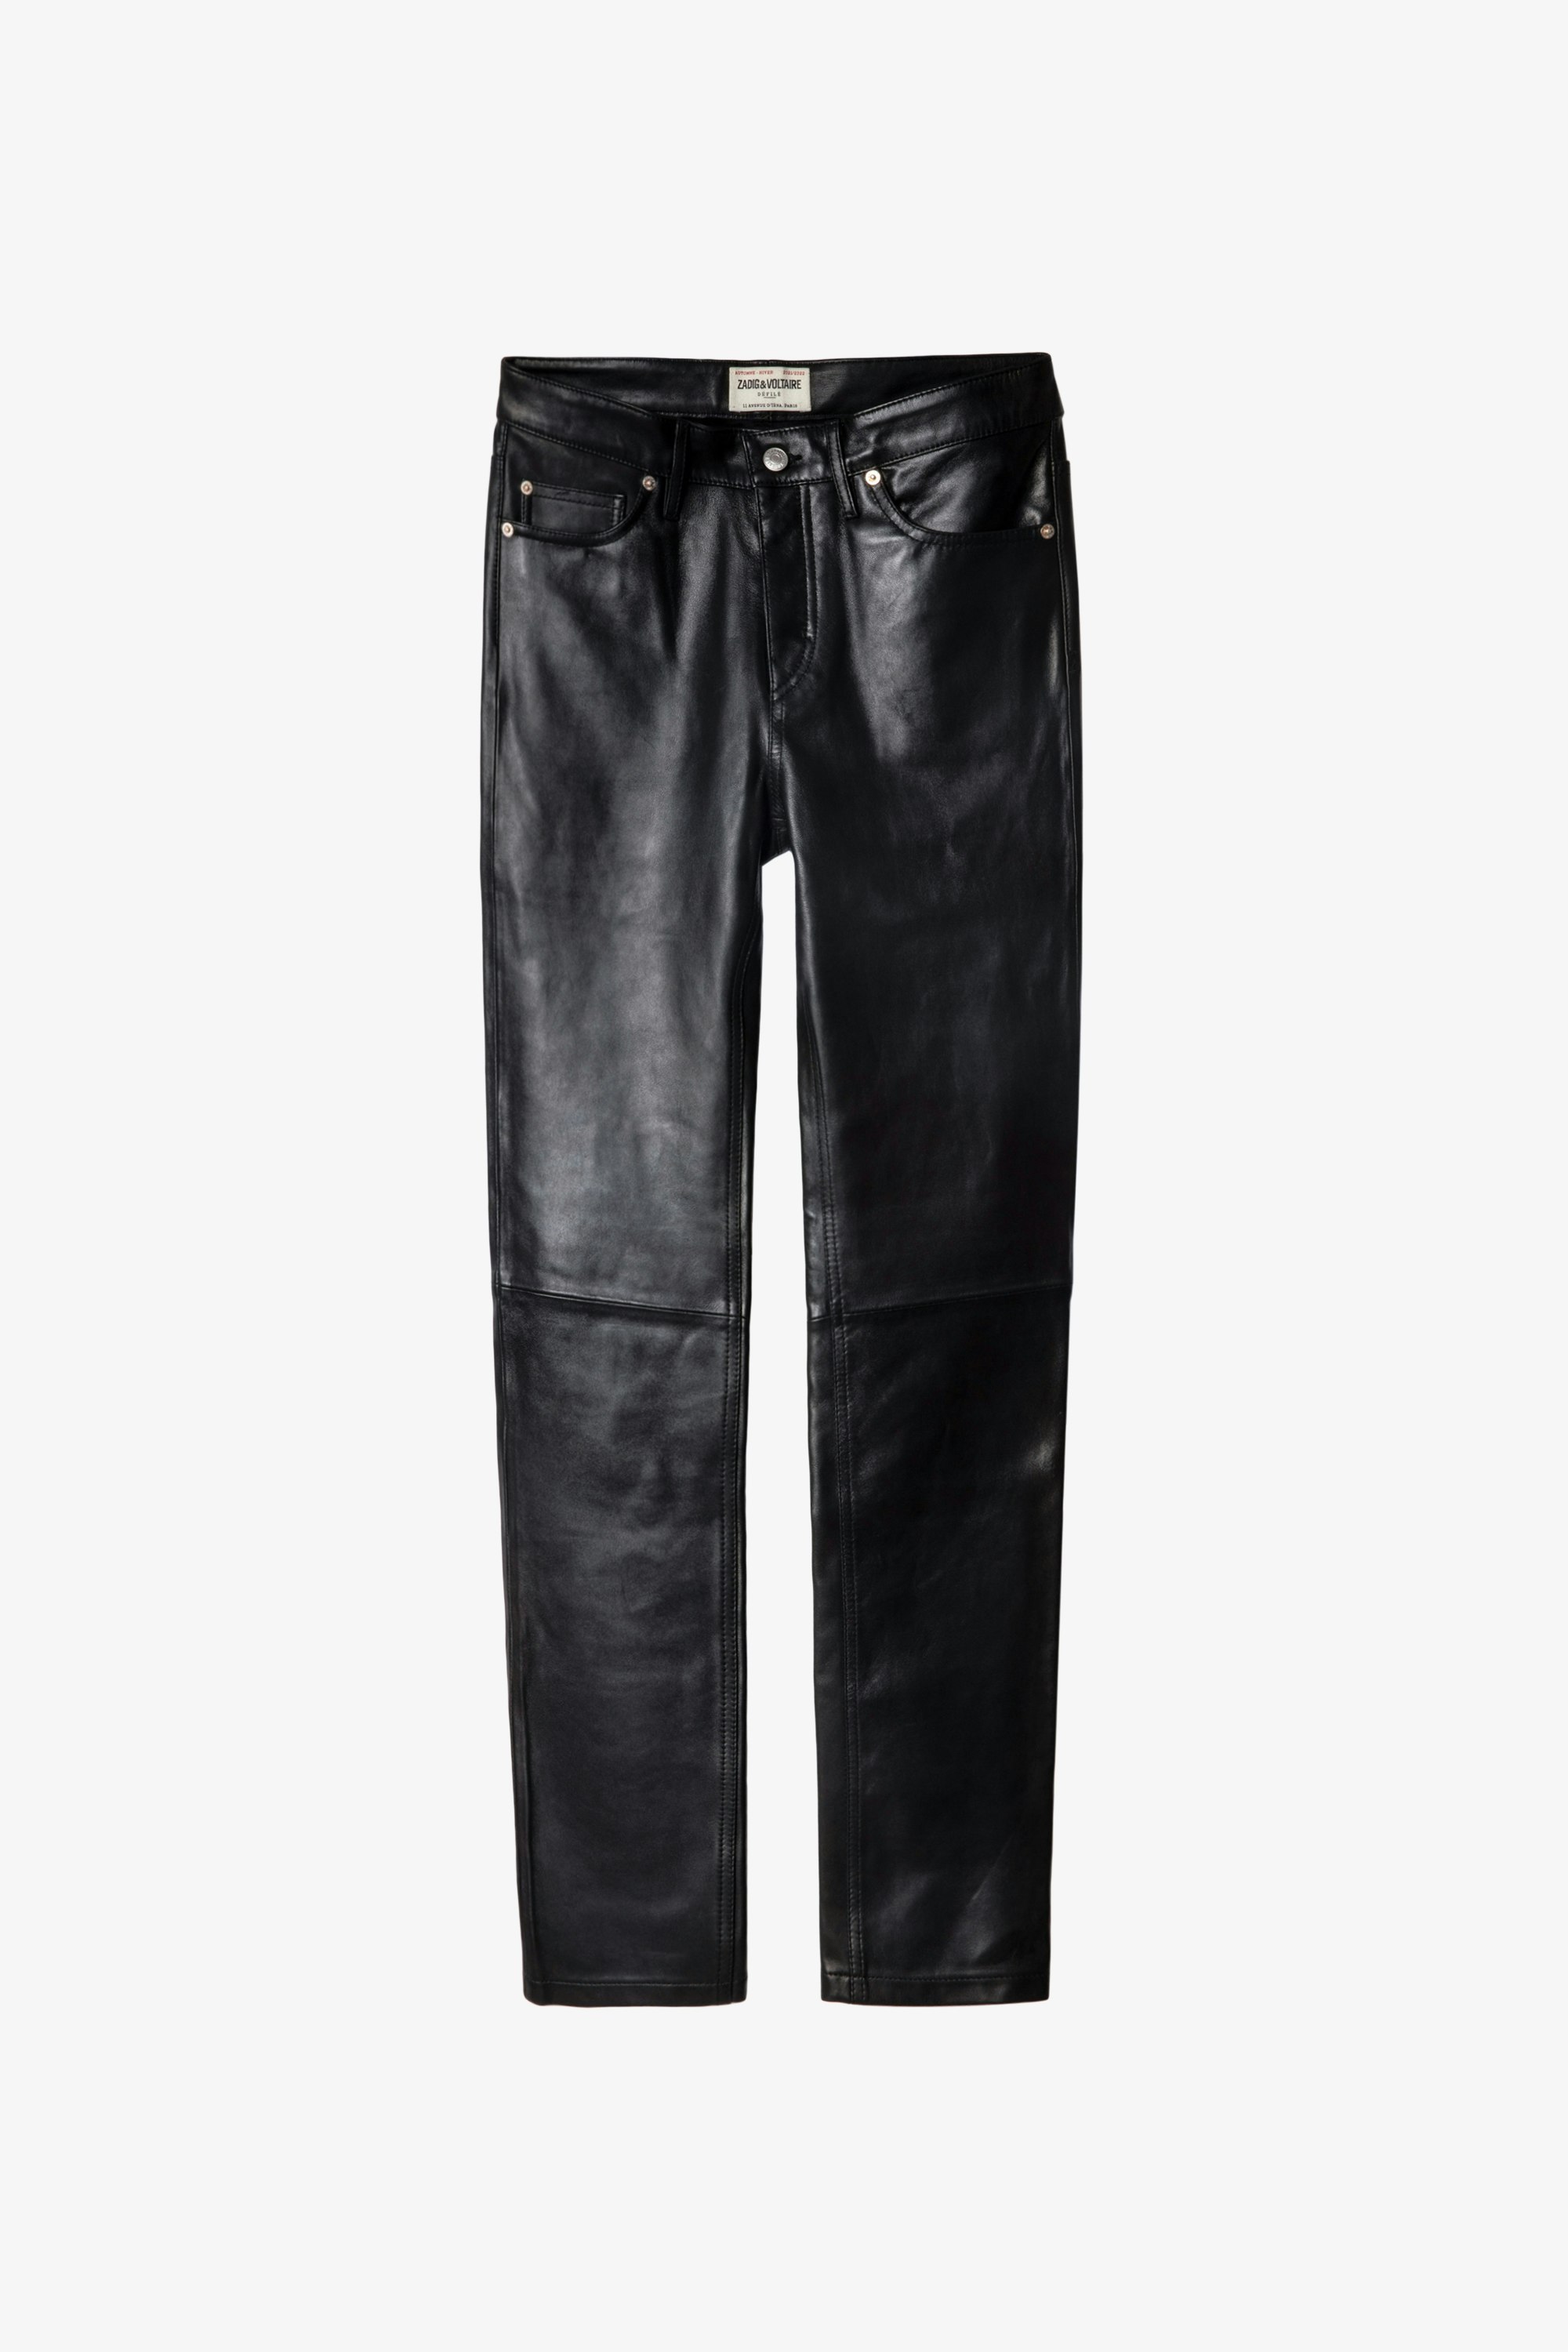 David Leather Pants - Unisex lambskin leather pants